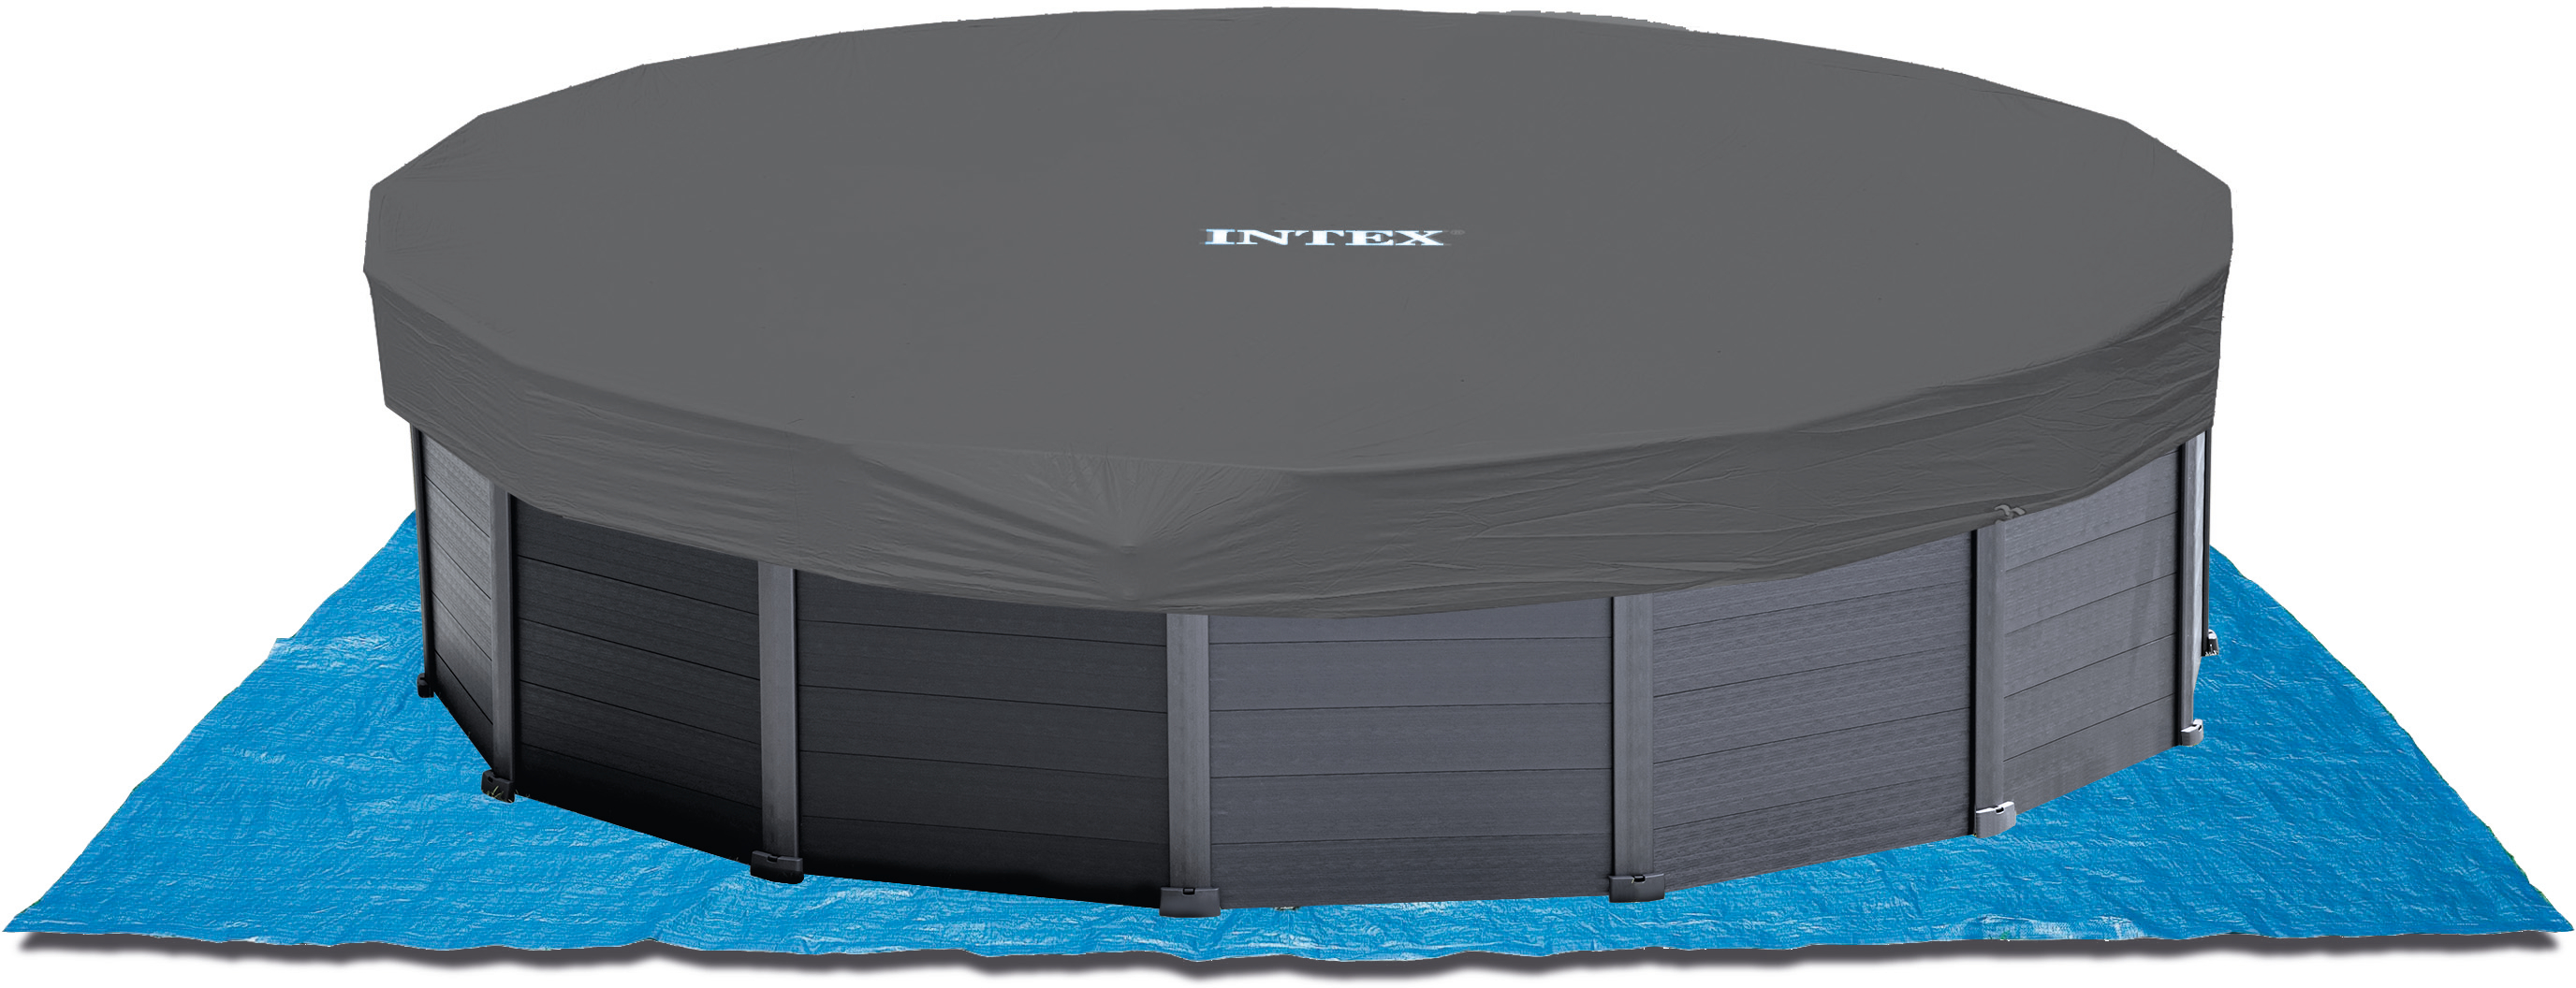 Kit piscine INTEX graphite rectangulaire tubulaire 4x3x1,24m